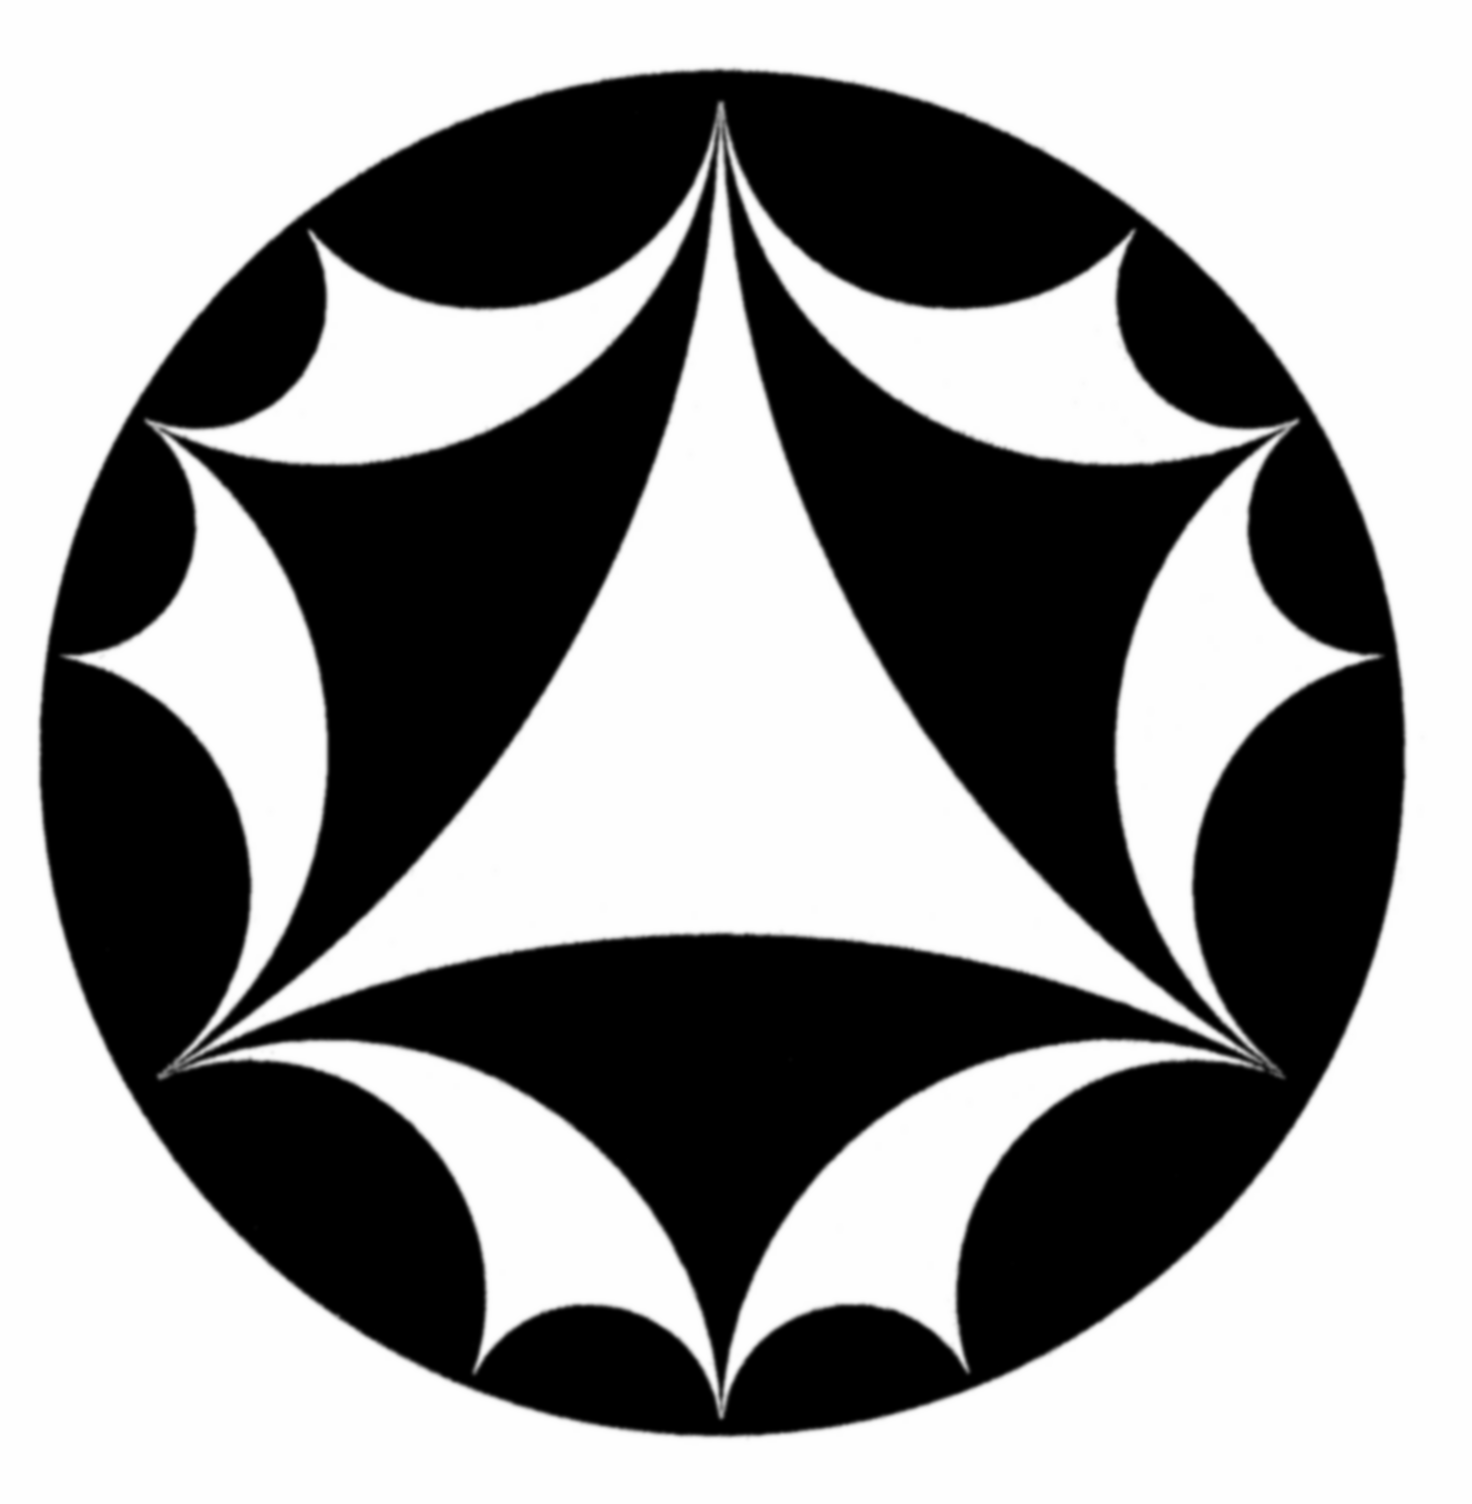 logo of "Finnish Mathematical Society "